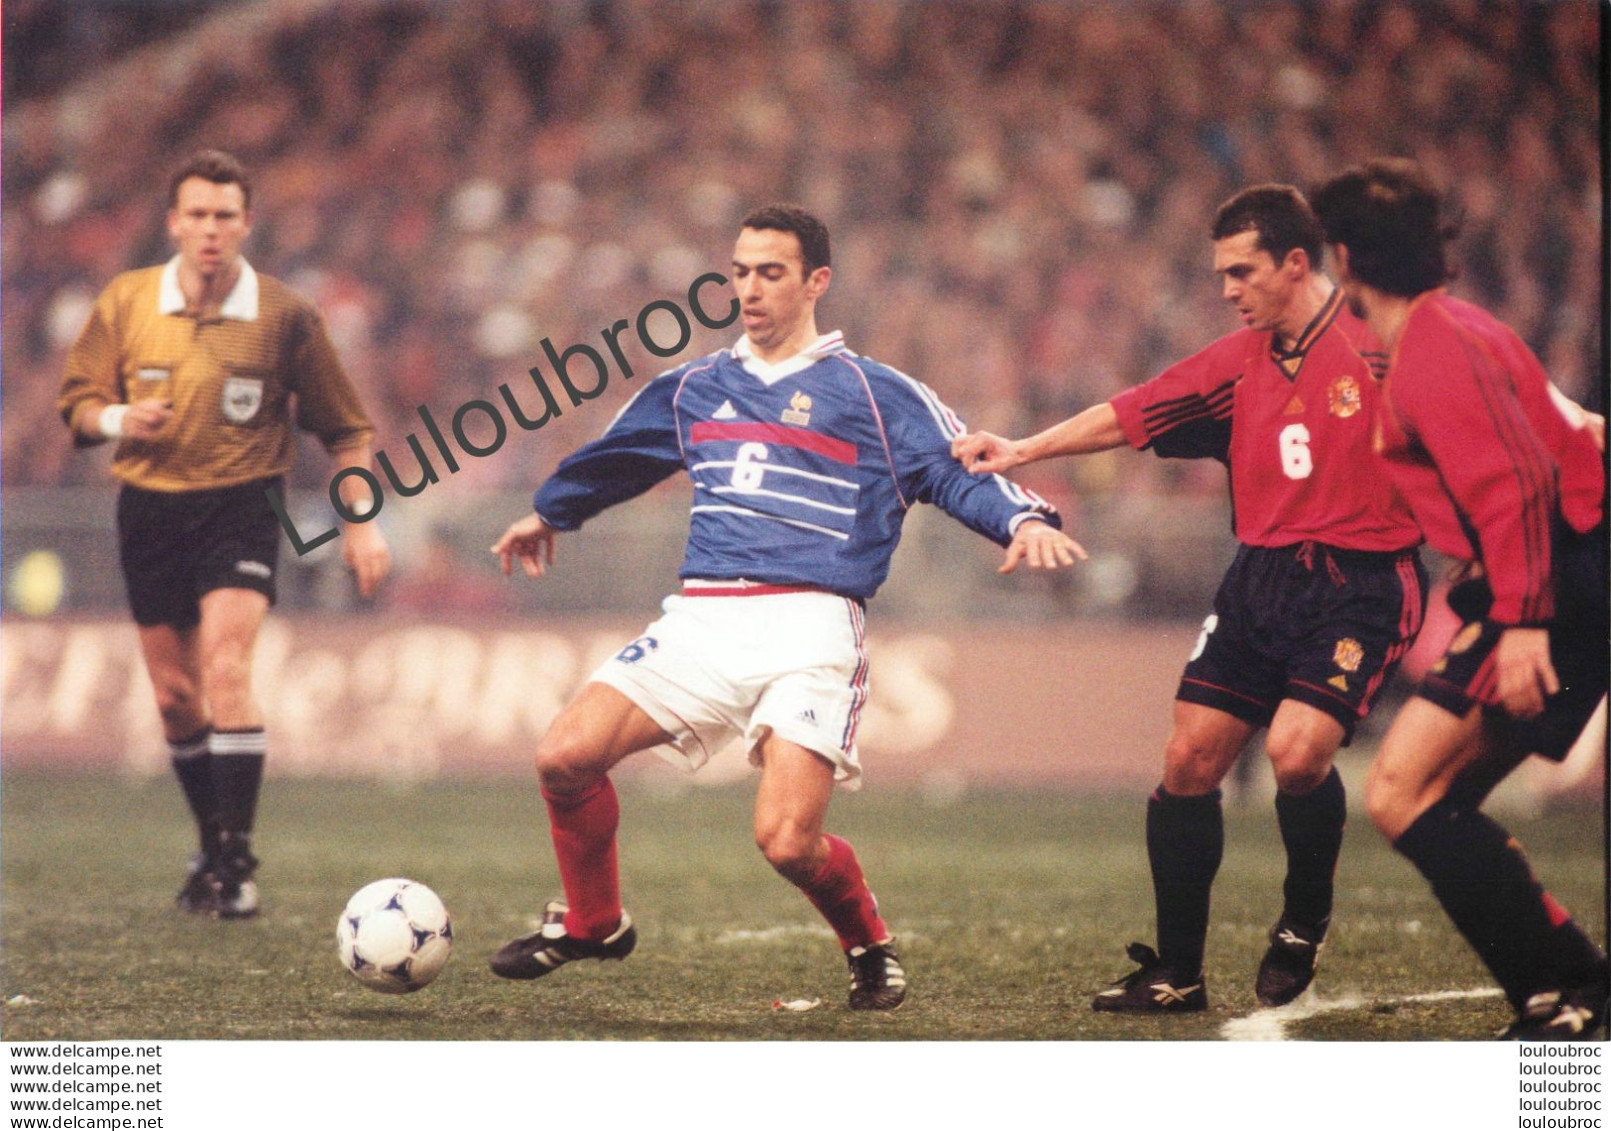 FOOTBALL FRANCE ESPAGNE 28/01/1998 PREMIER MATCH AU STADE DE FRANCE DJORKAEFF PHOTO DE PRESSE AGENCE  ANGELI 27 X 18 CM - Deportes